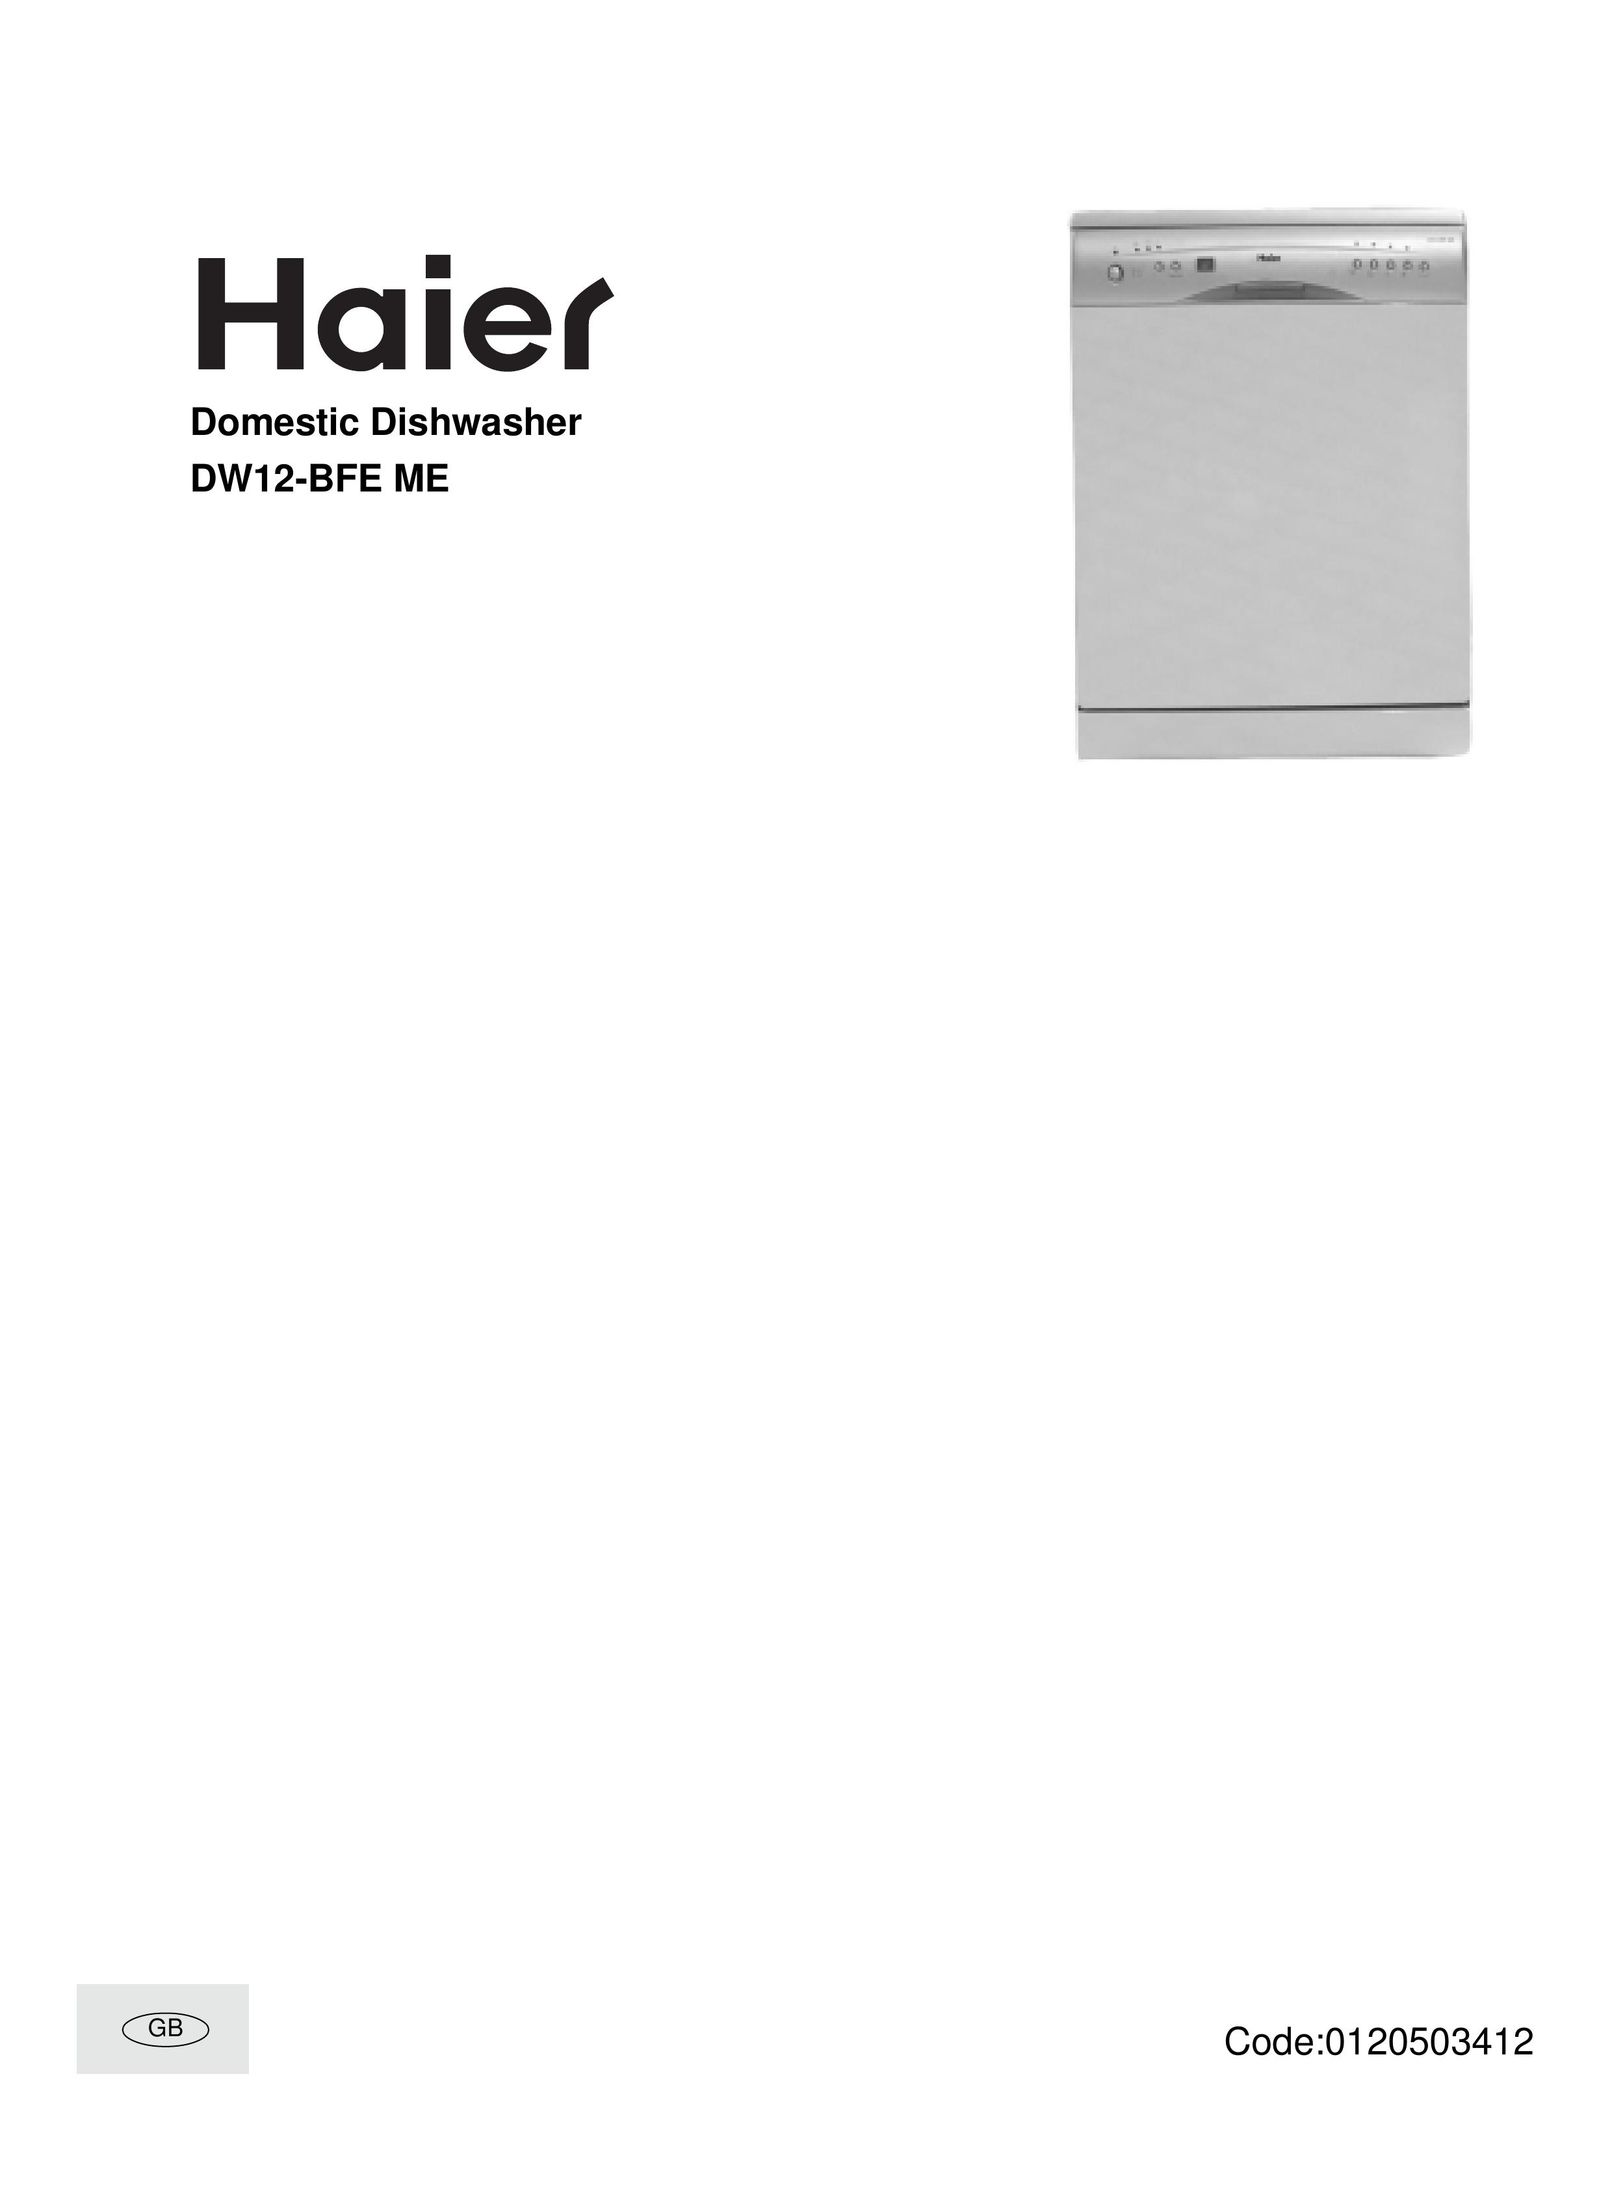 Haier DW12-BFE ME Dishwasher User Manual